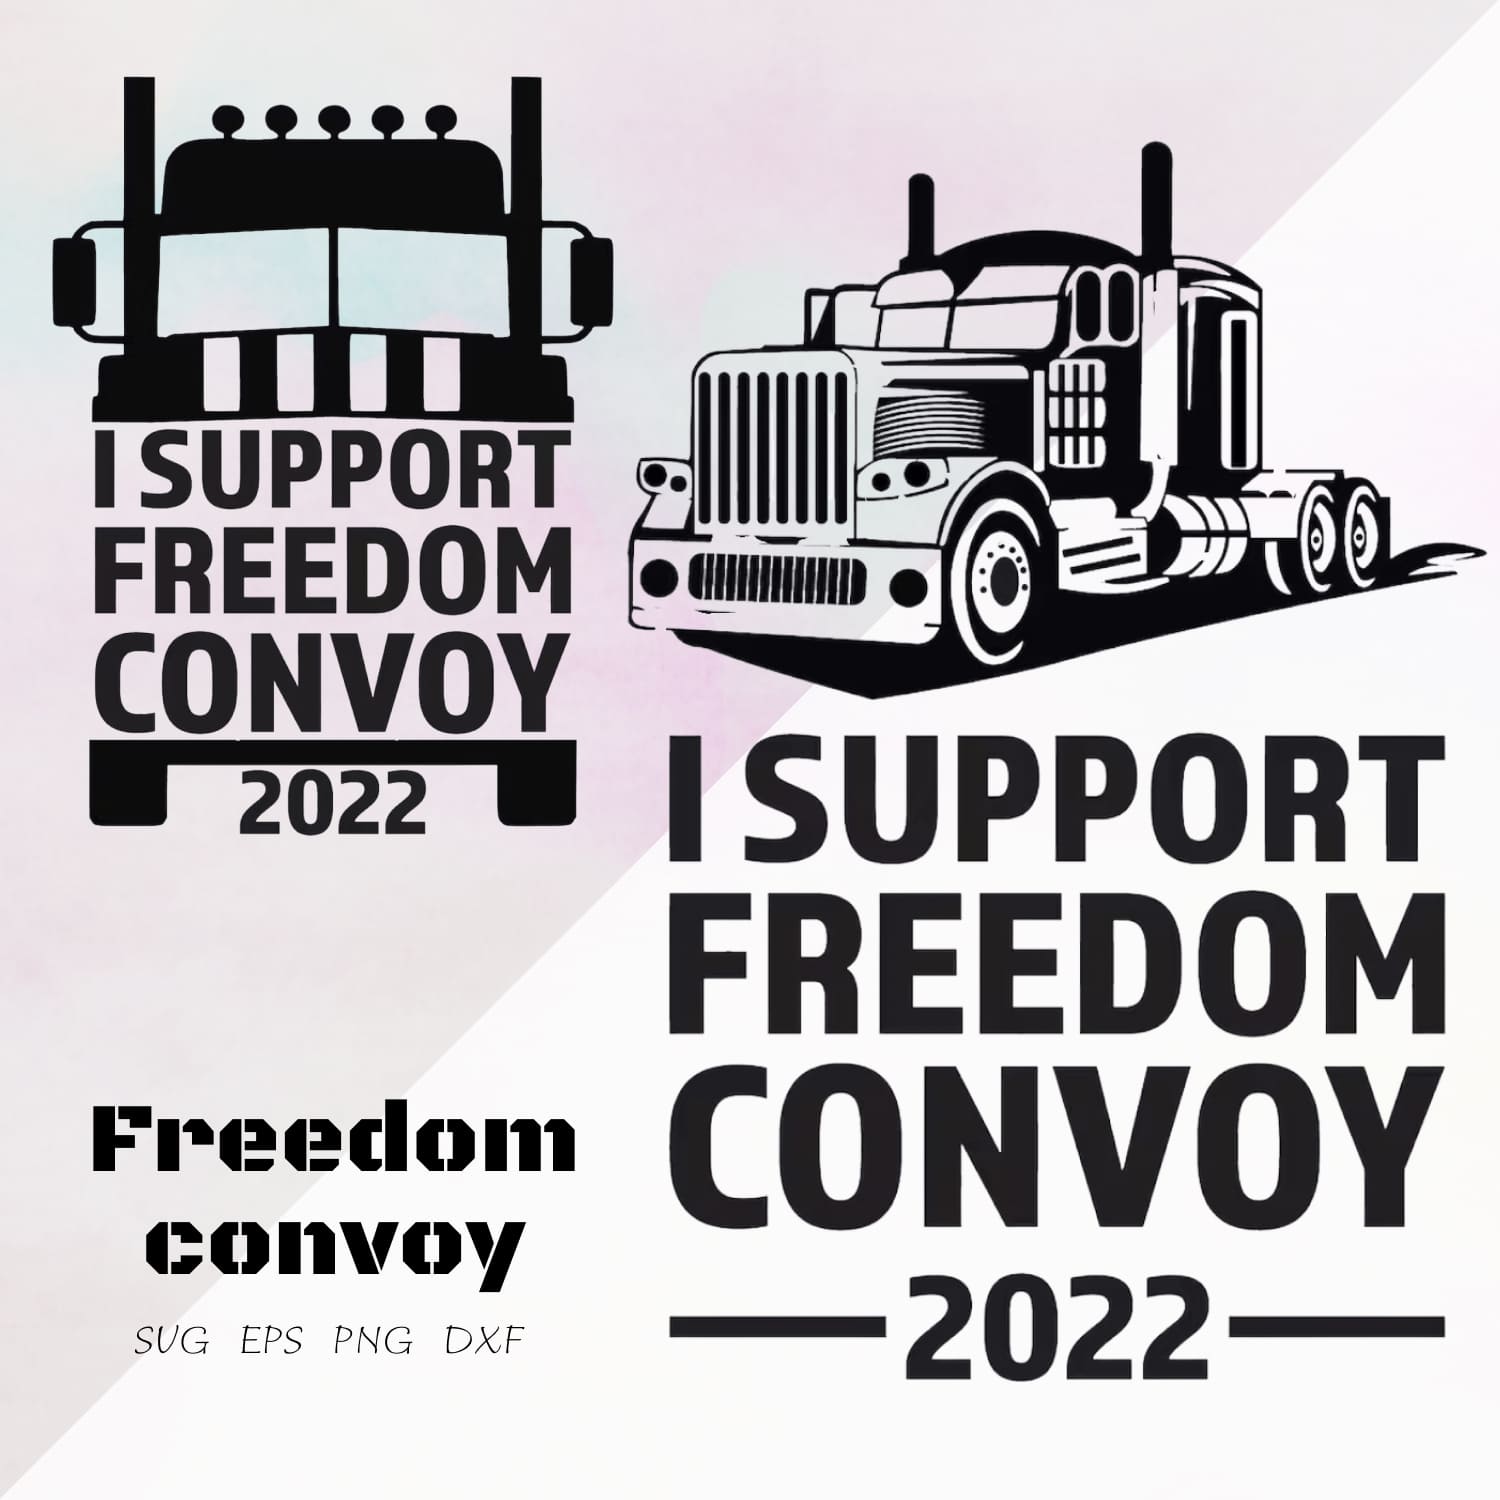 Freedom convoy 2022 svg.